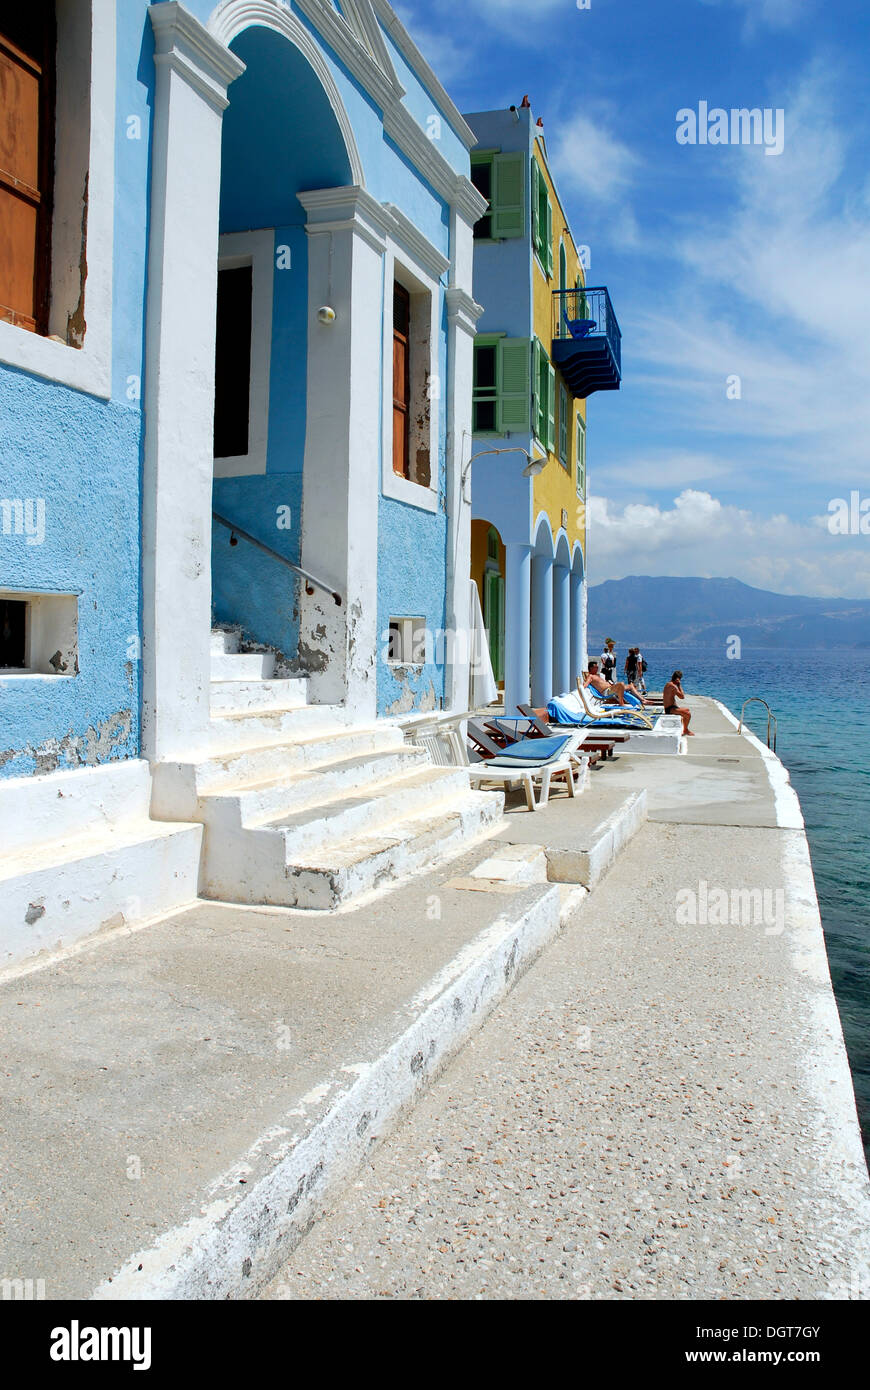 Steps, houses on the waterside, town Megisti on Kastelorizo island, Meis, Dodecanese Islands, Aegean, Mediterranean, Greece Stock Photo